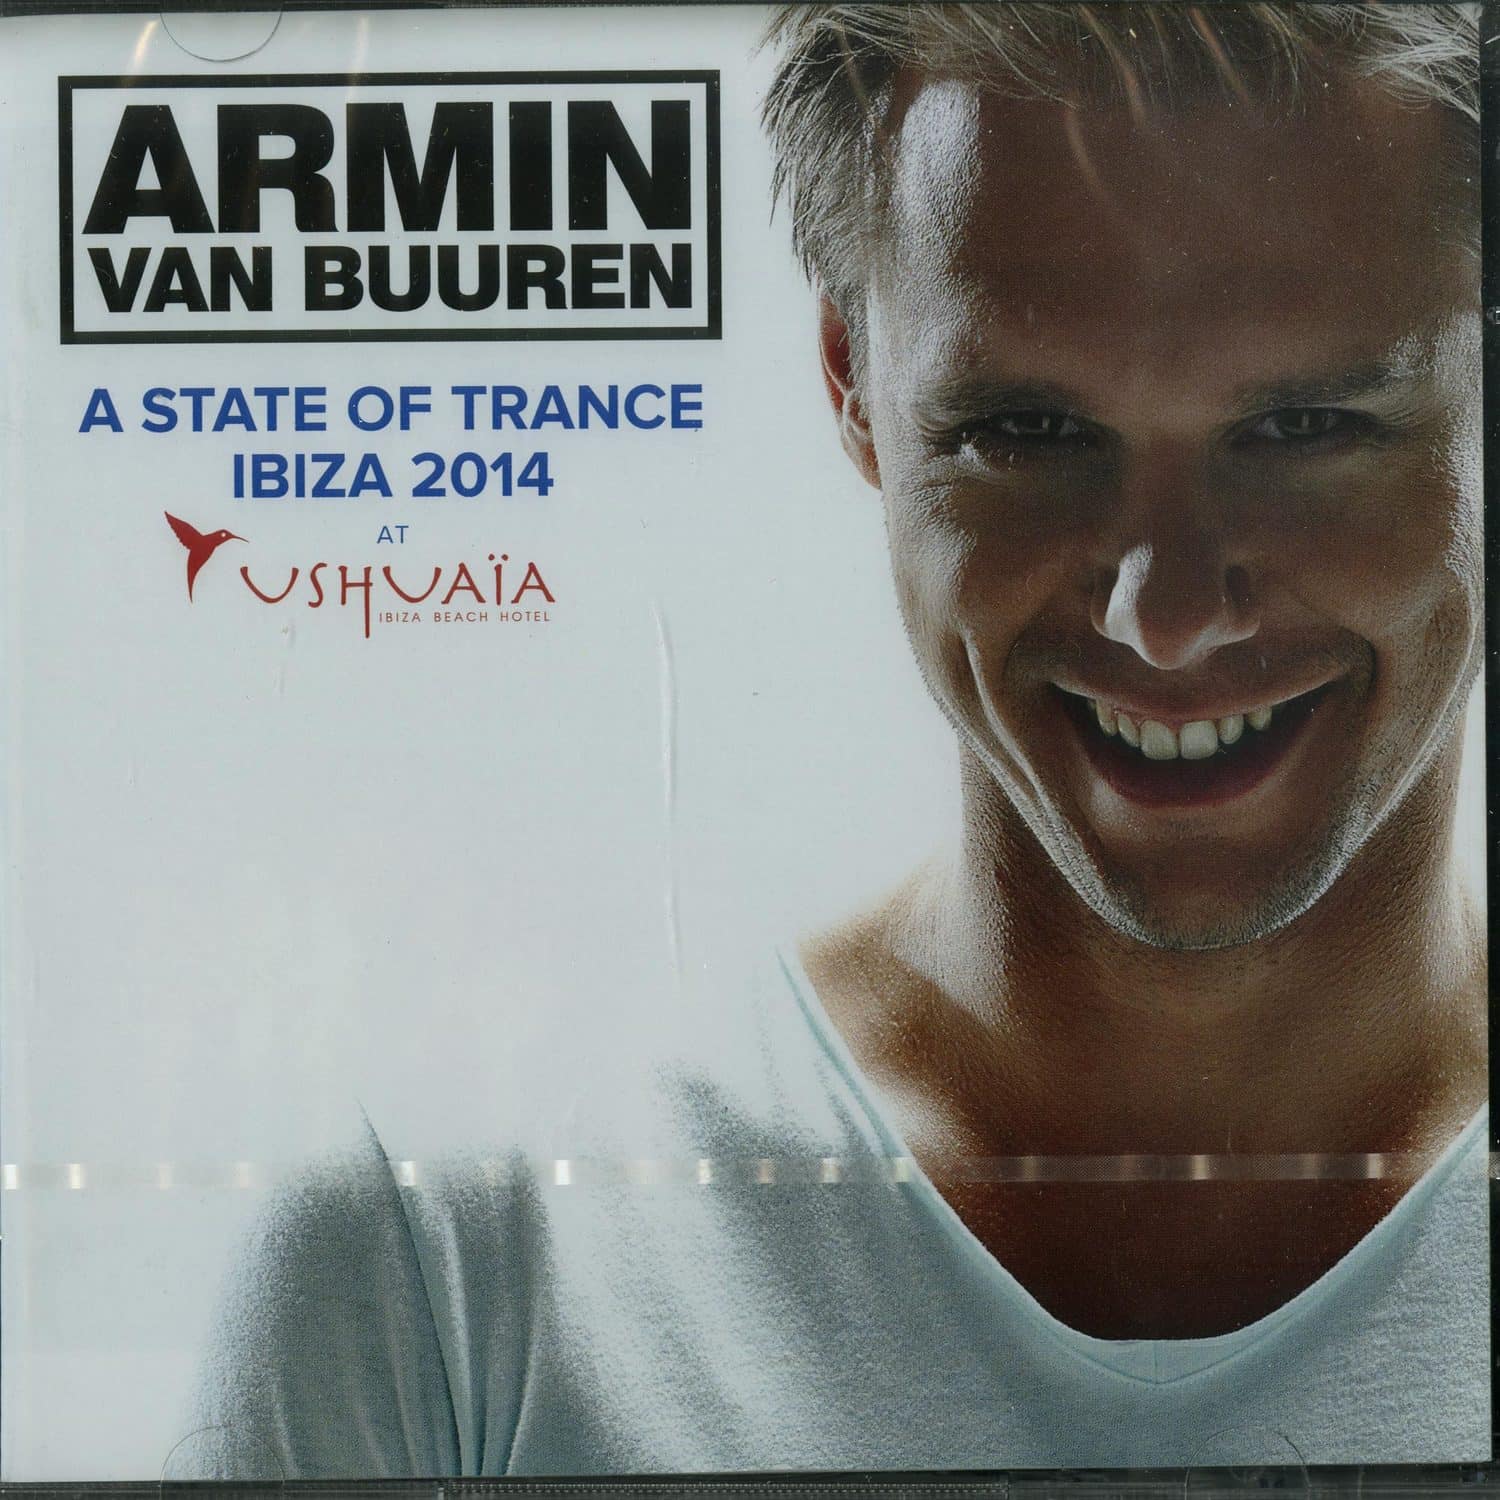 Armin Van Buuren - A State Of Trance - At Ushuaia, Ibiza 2014 